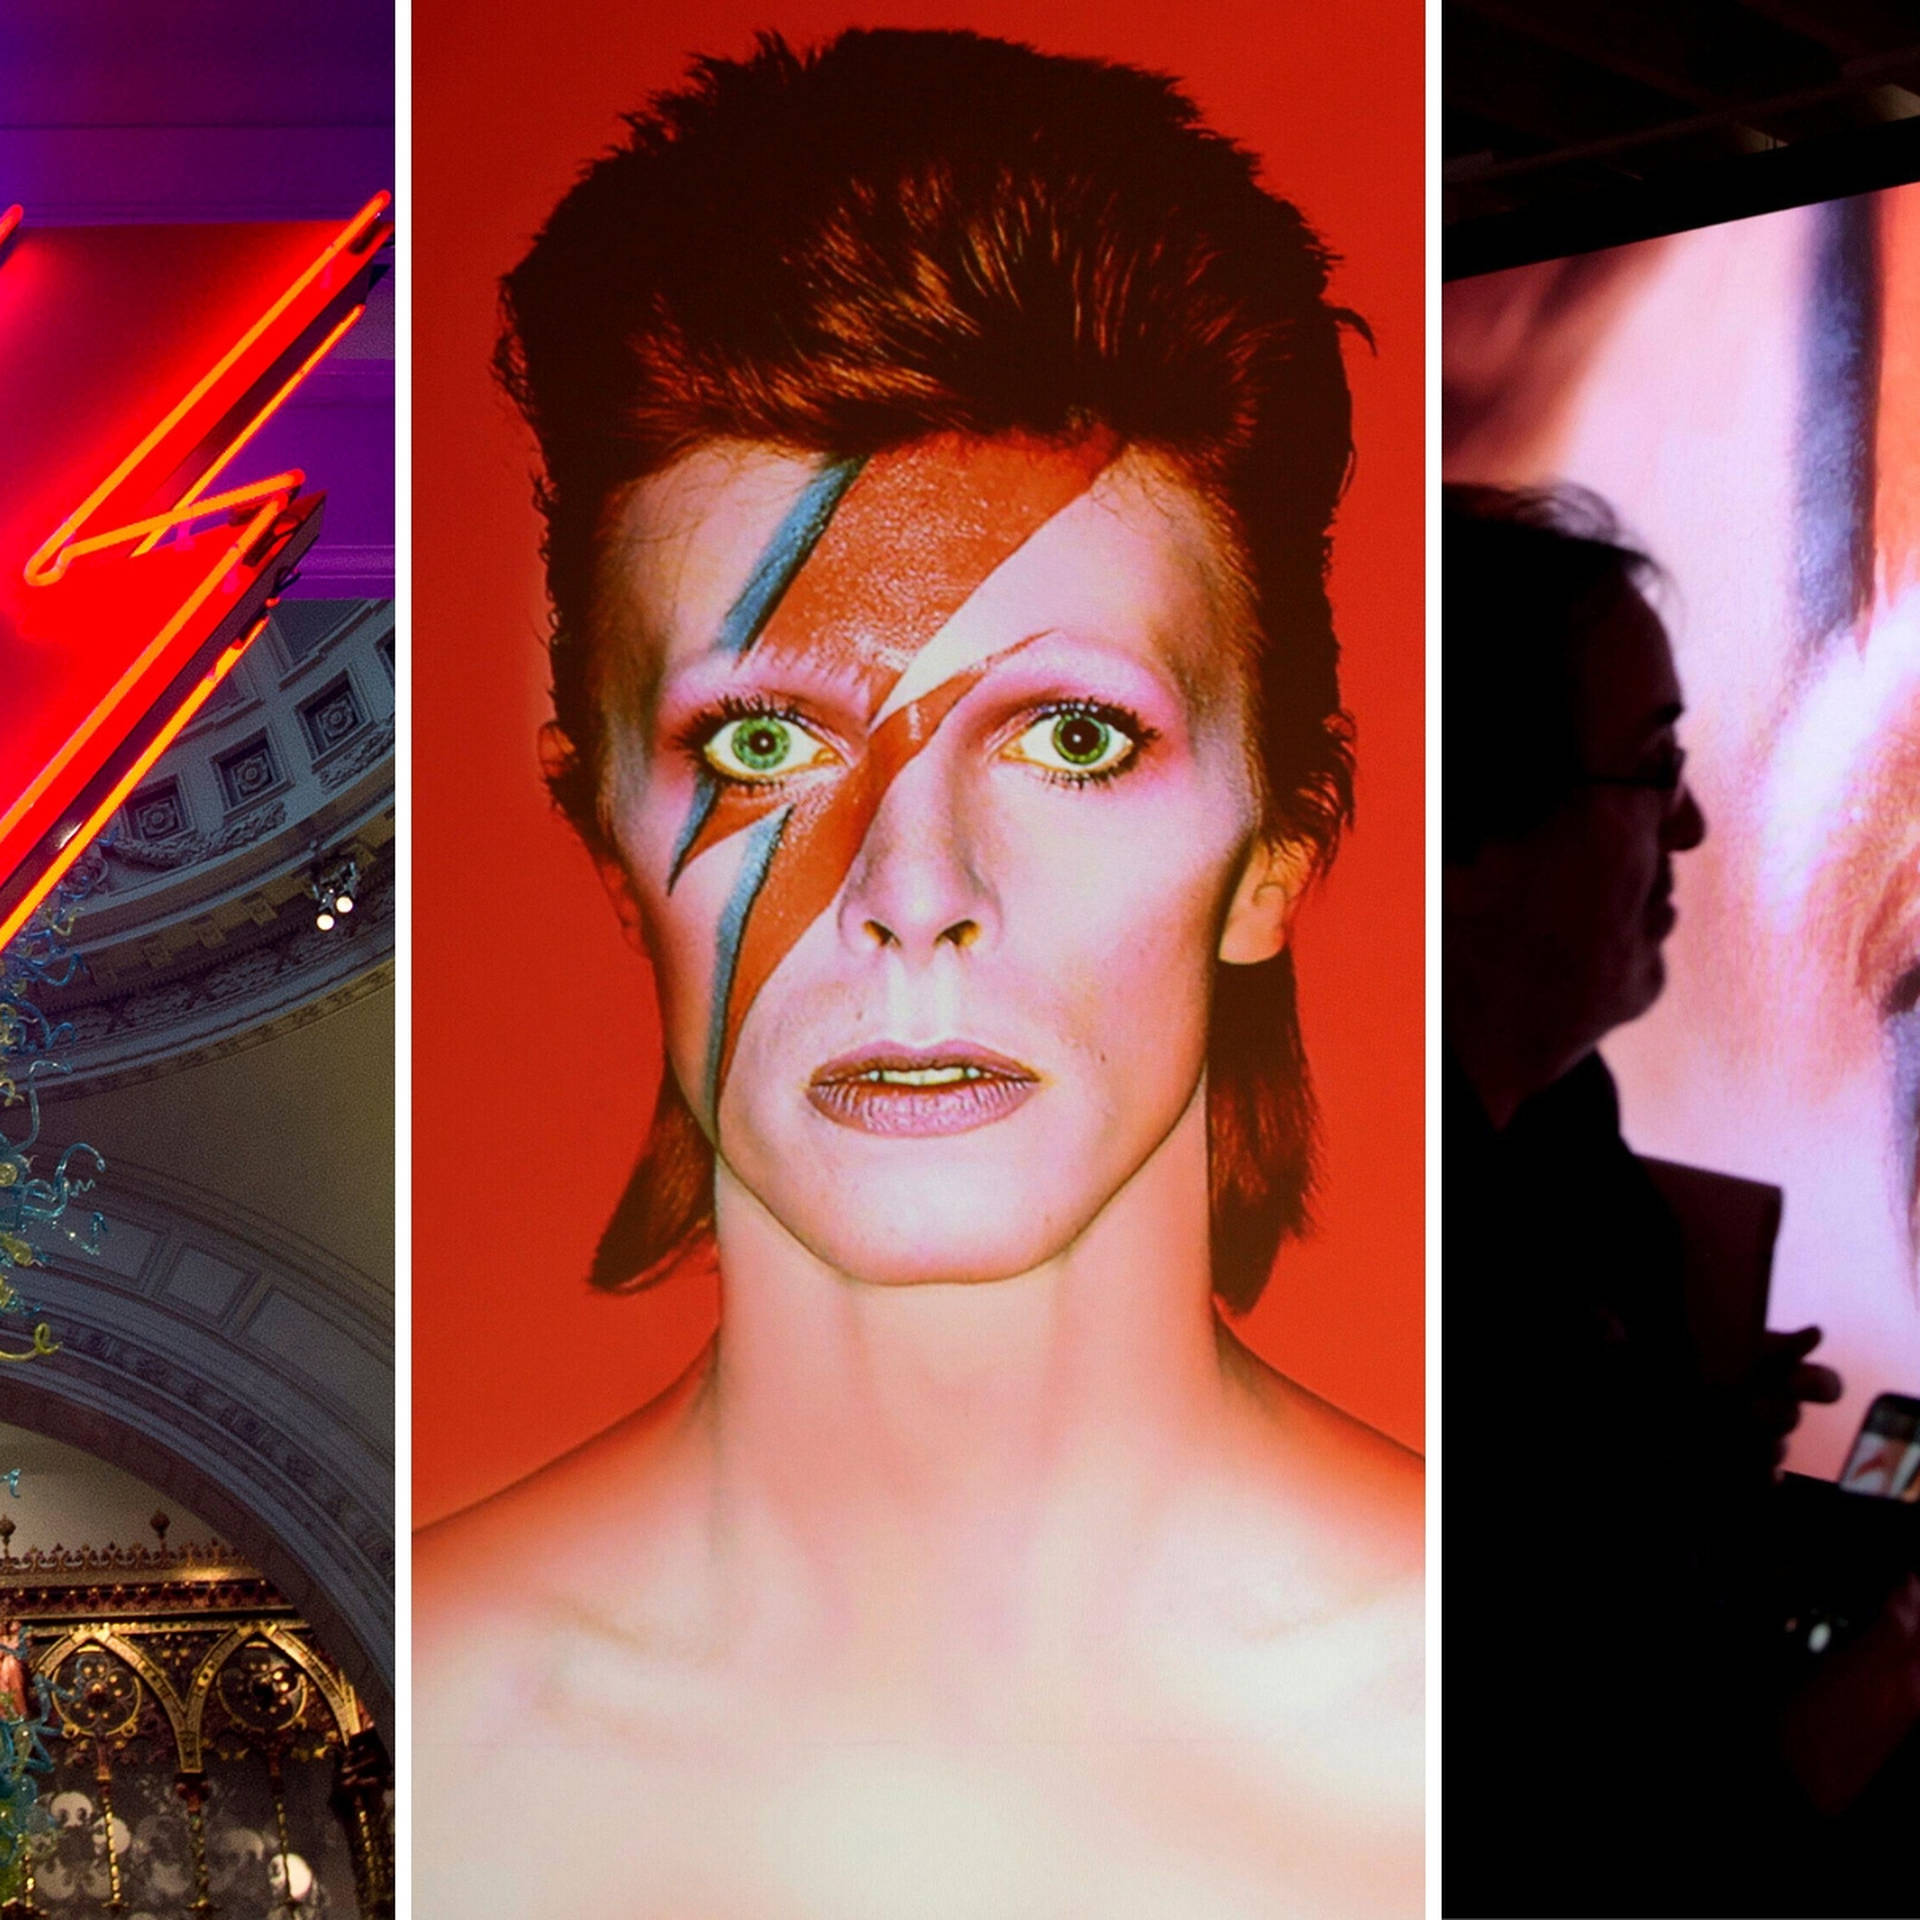 David Bowie's lightning bolt Who the pop legend's iconic symbol? - Gold